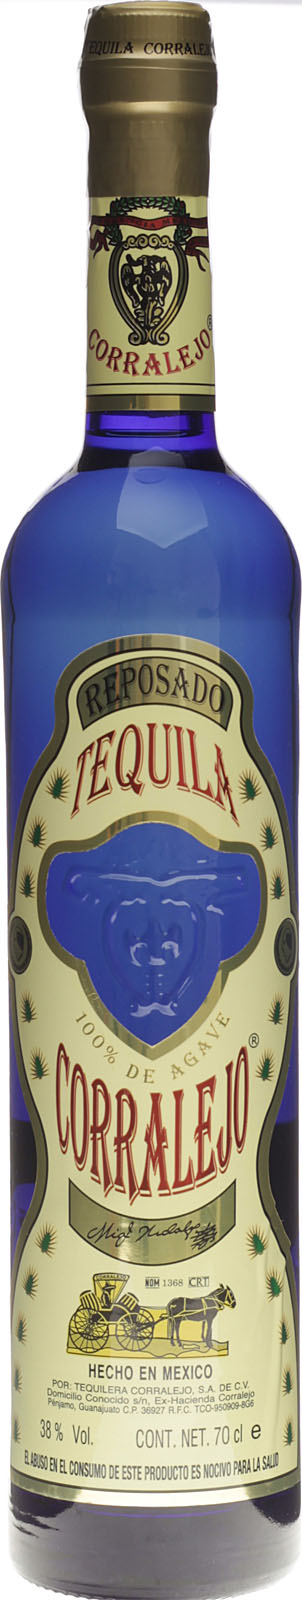 Reposado kaufen hier Corralejo Onlineshop Tequila im